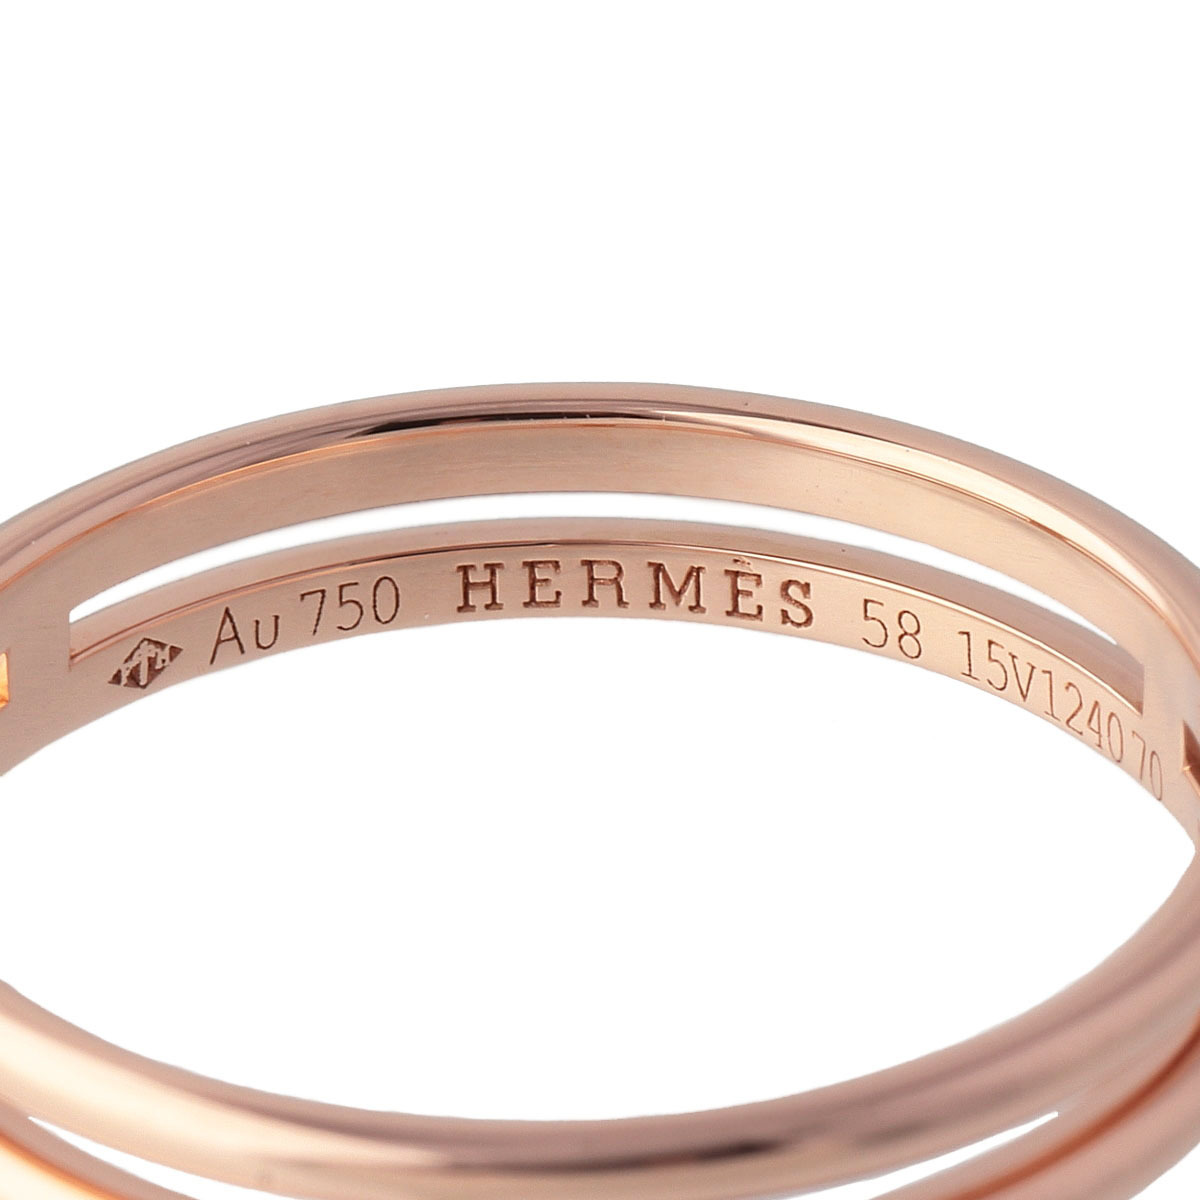  Hermes a Lien n кольцо #58 Au750PG новый товар с отделкой HERMES[16999]